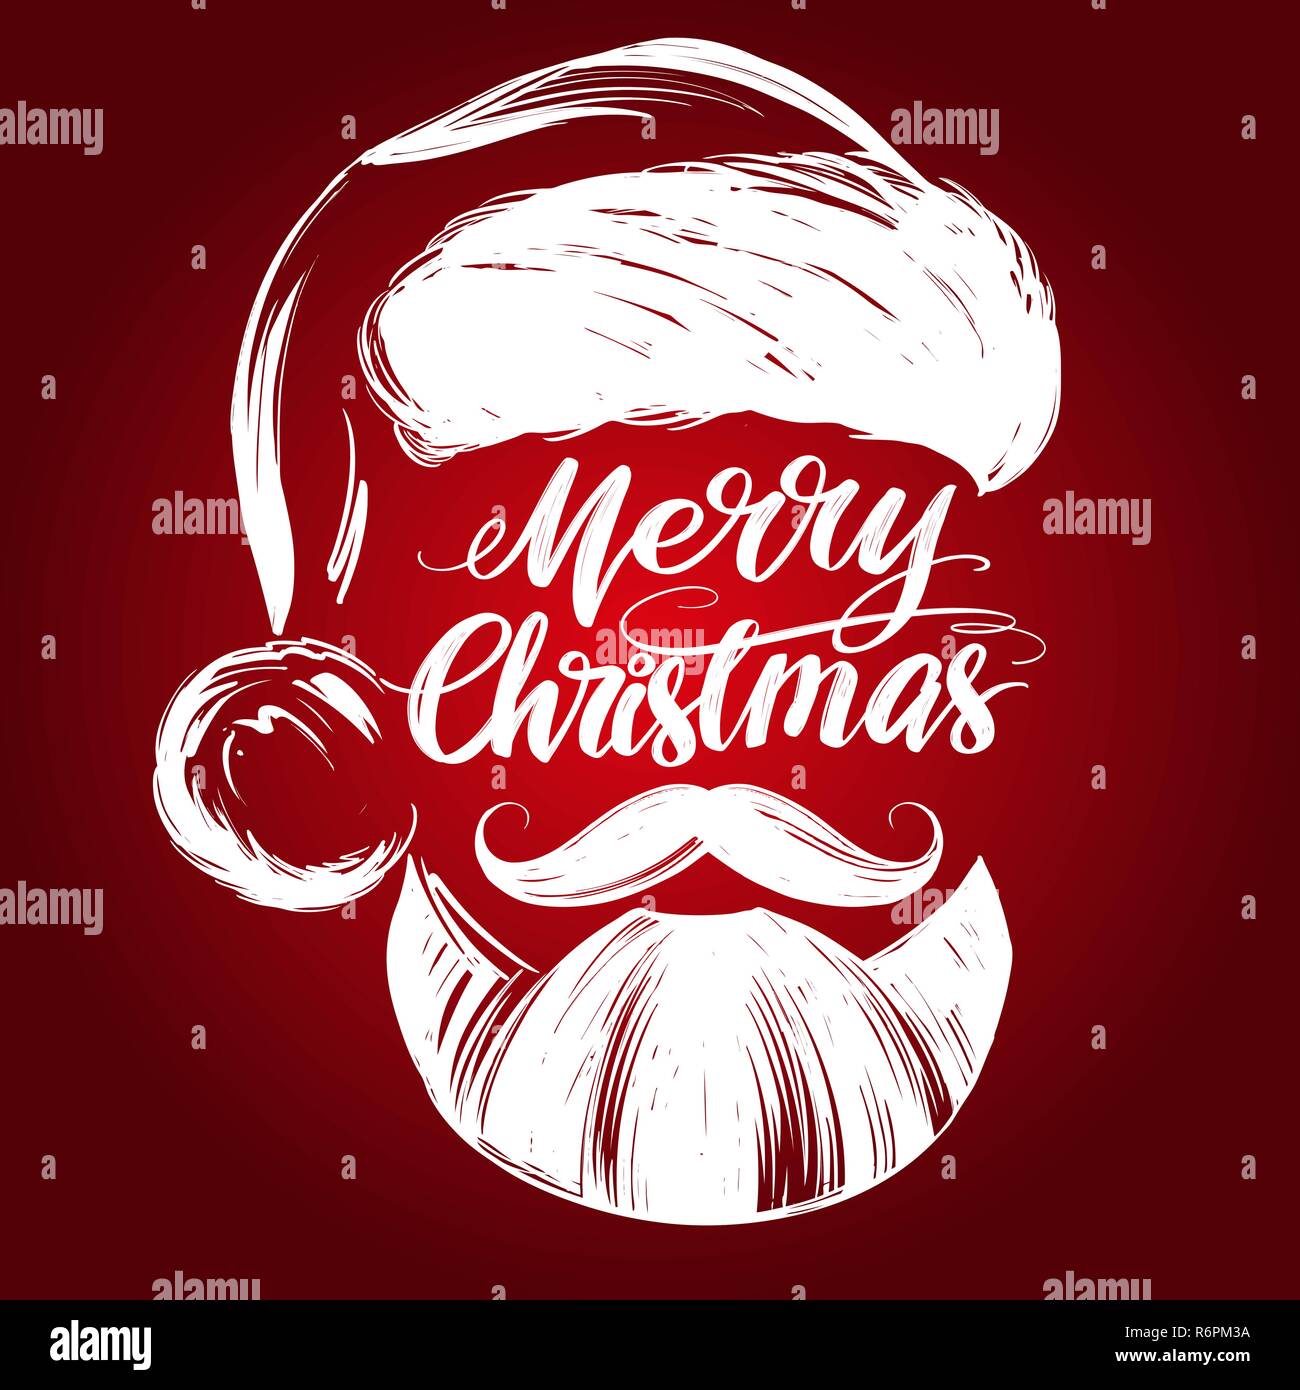 Santa Claus, Christmas symbol hand drawn vector illustration sketch, calligraphic text Stock Vector